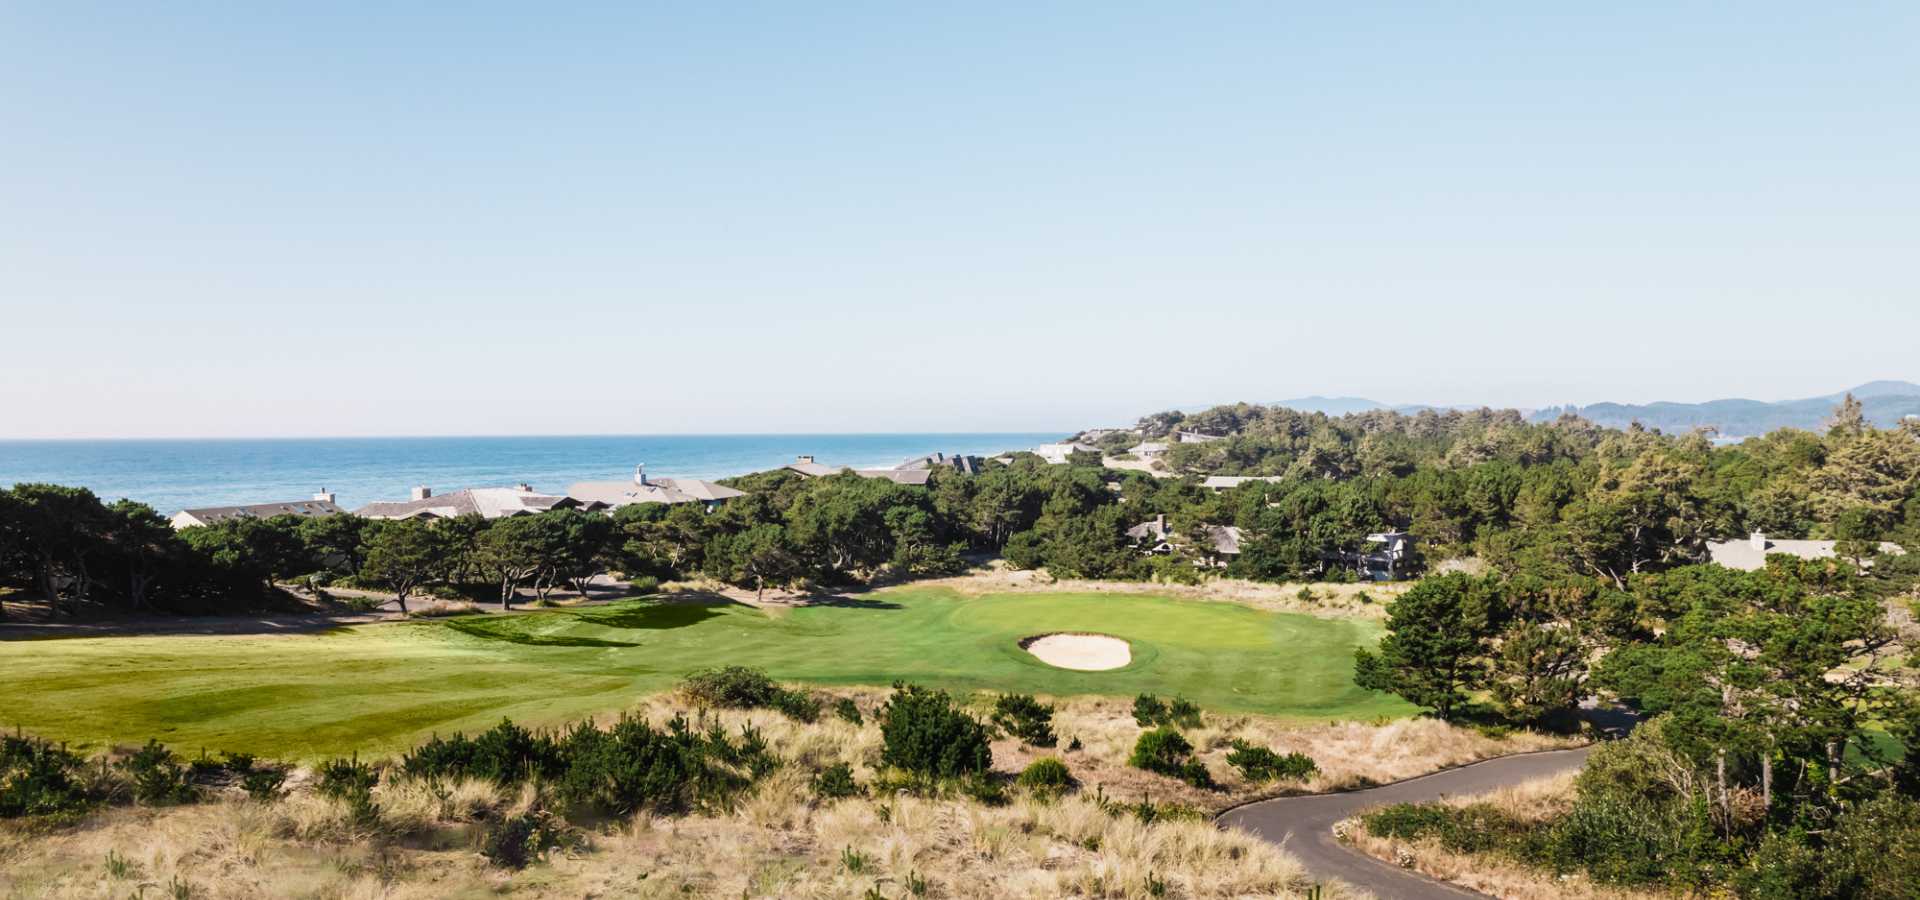 Golf course overlooking the ocean at Salishan Coastal Lodge